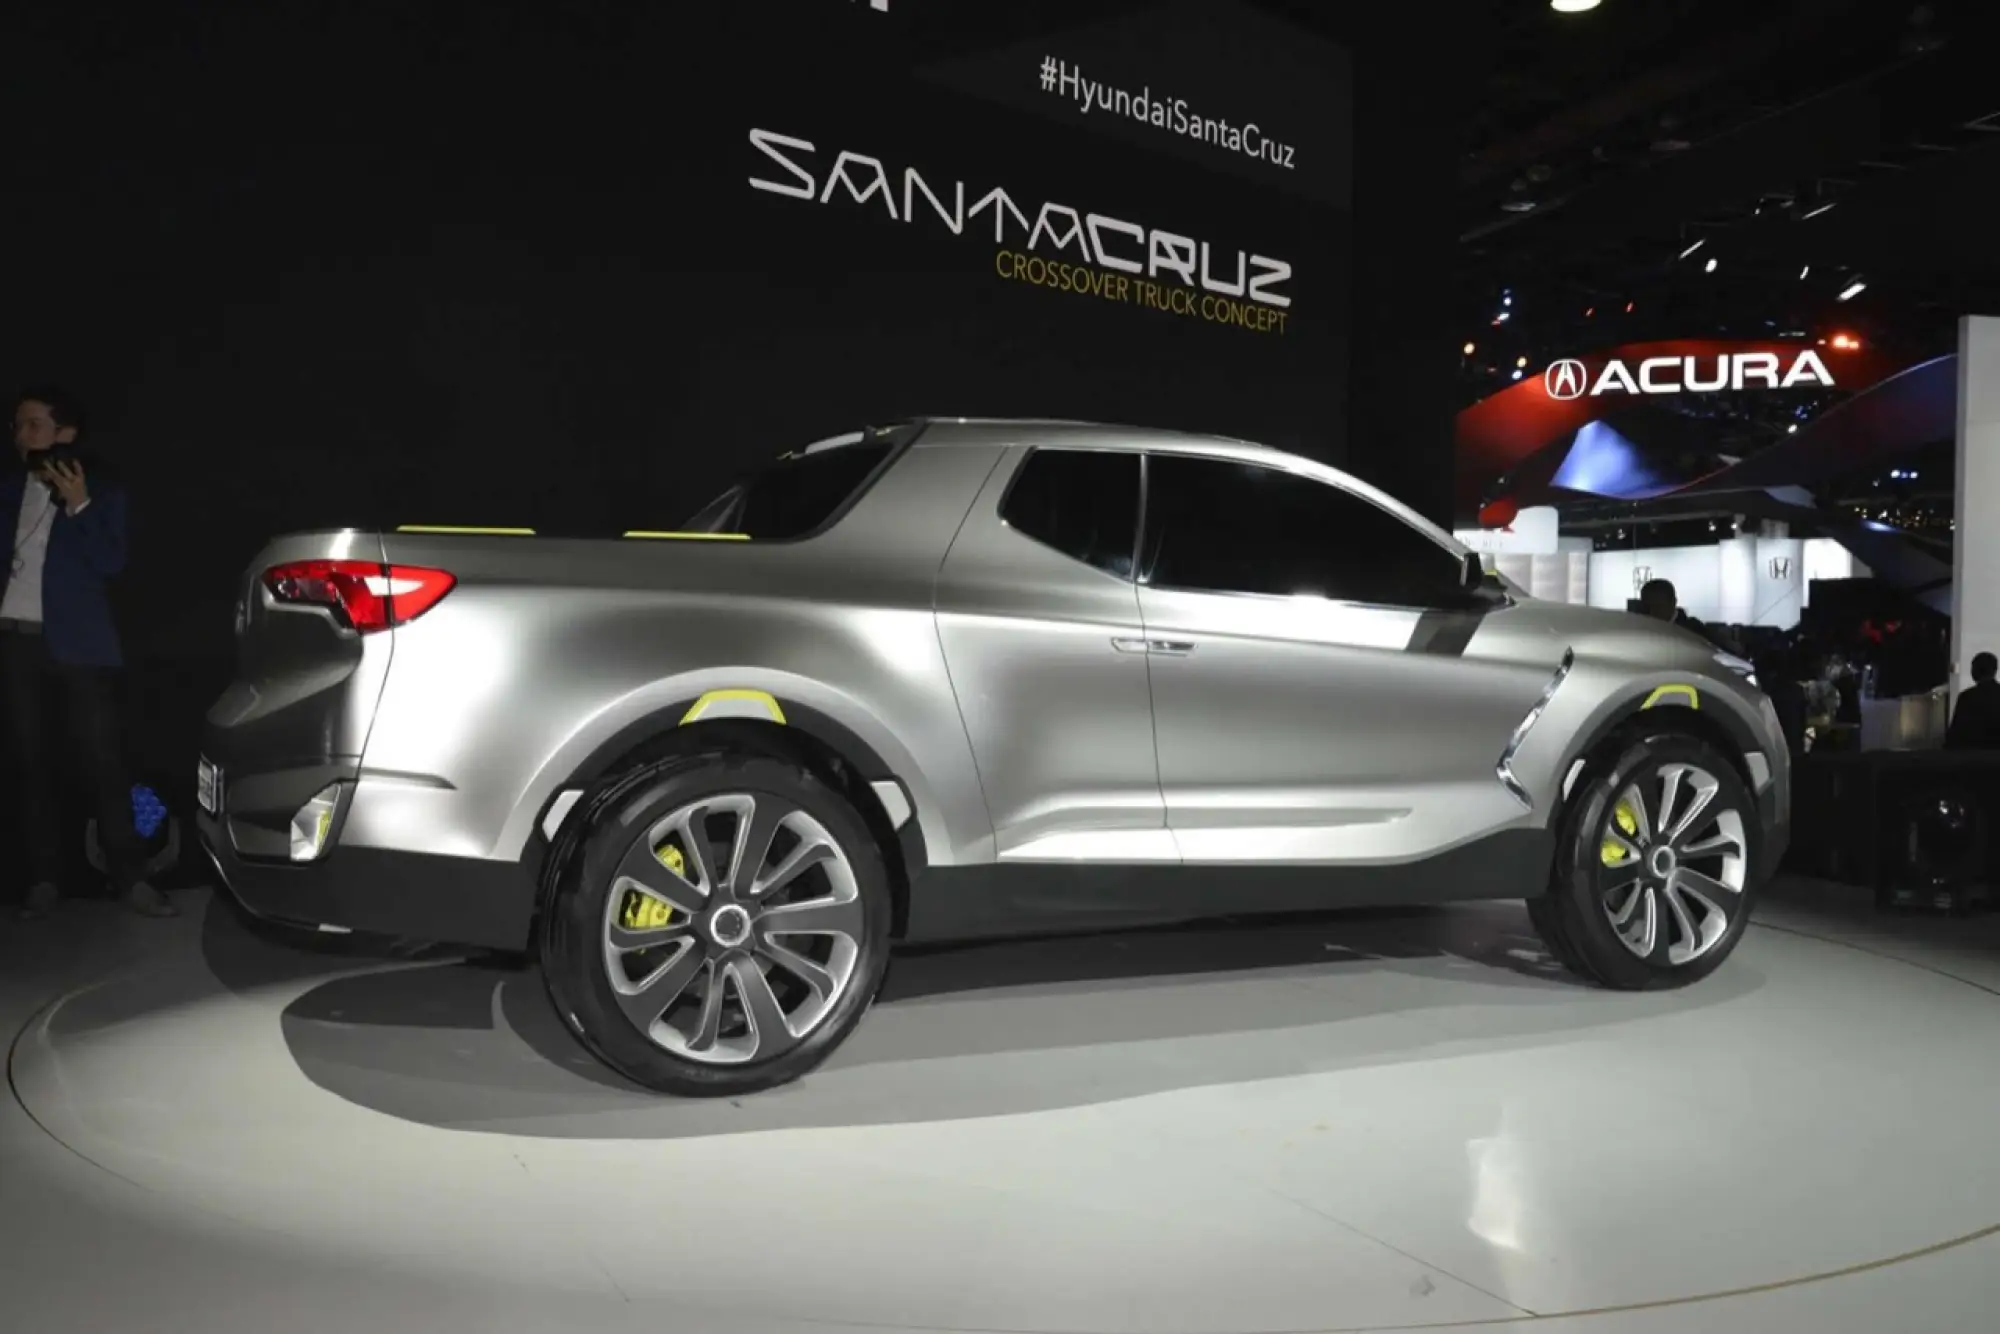 Hyundai Santa Cruz Crossover truck concept 2015 - 2